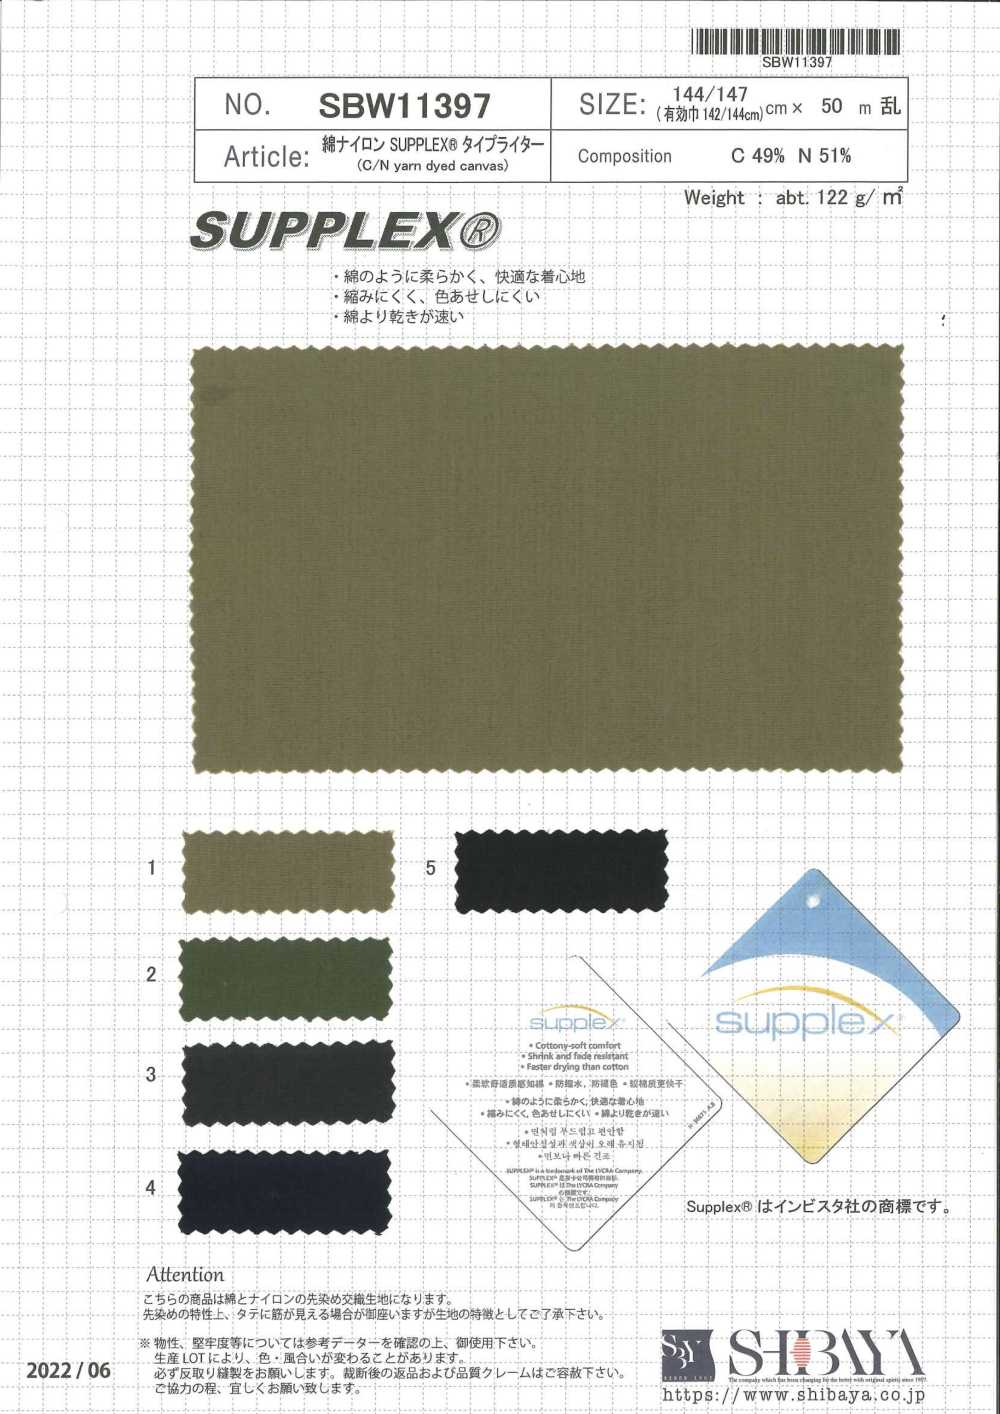 SBW11397 Cotton Nylon SUPLLEX® Typewritter Cloth[Textile / Fabric] SHIBAYA